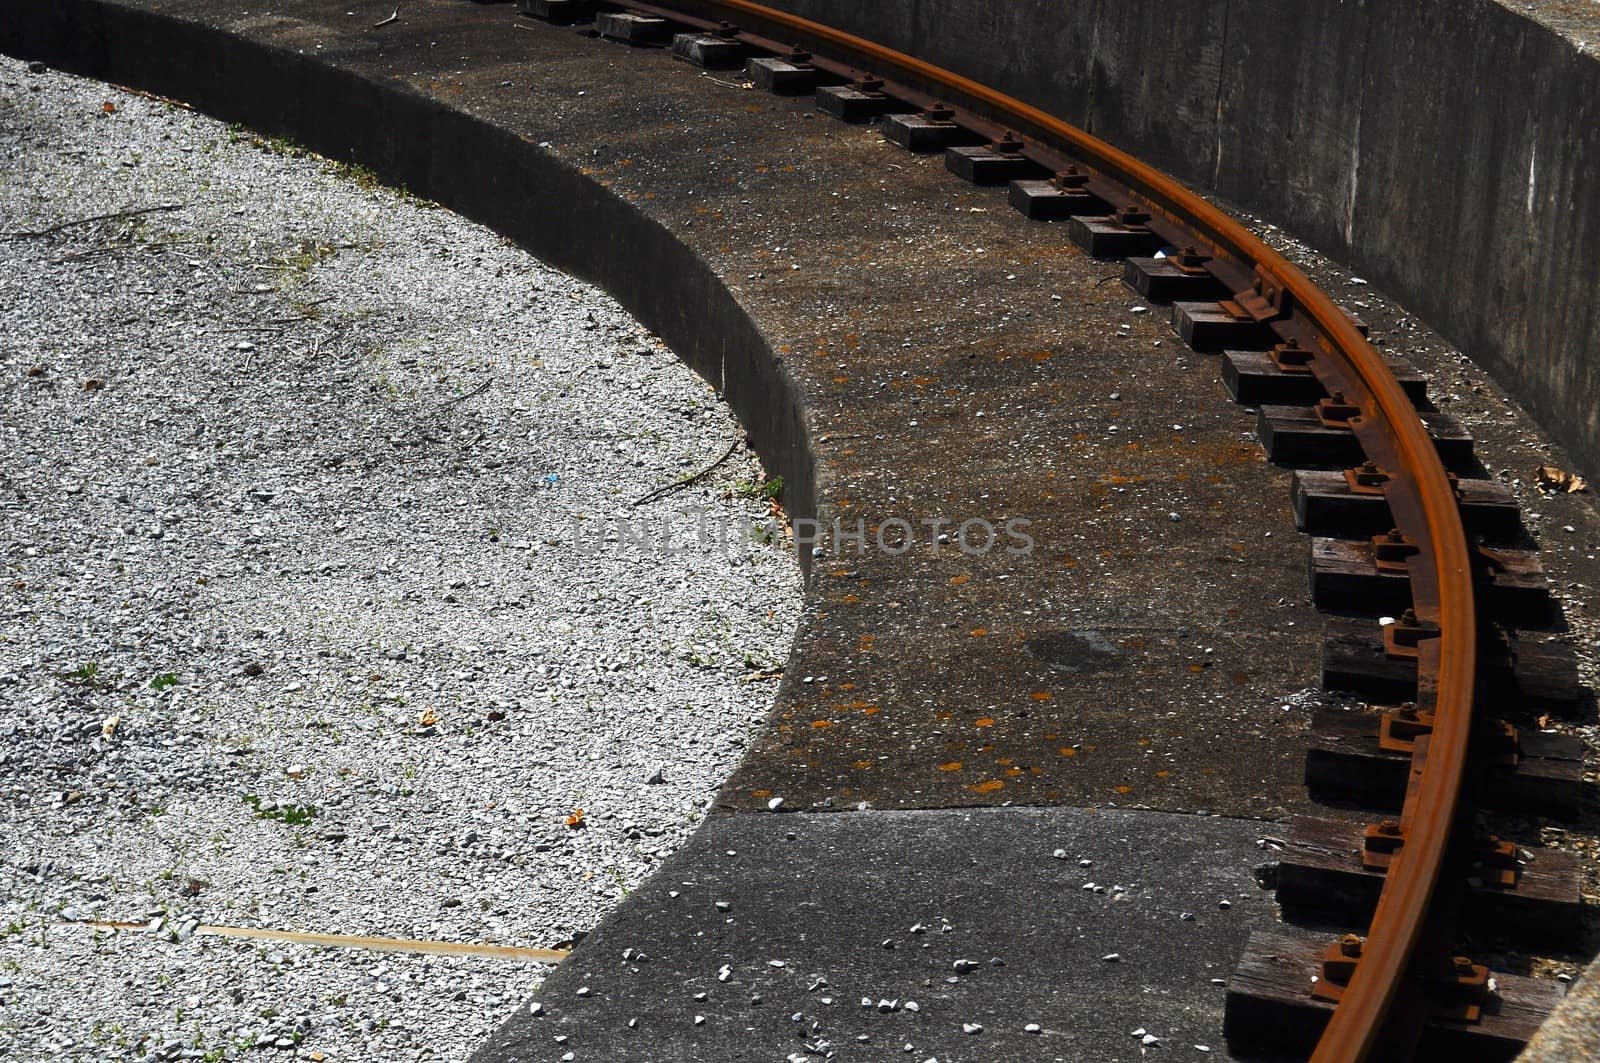 Locomotive Turntable 3 by RefocusPhoto